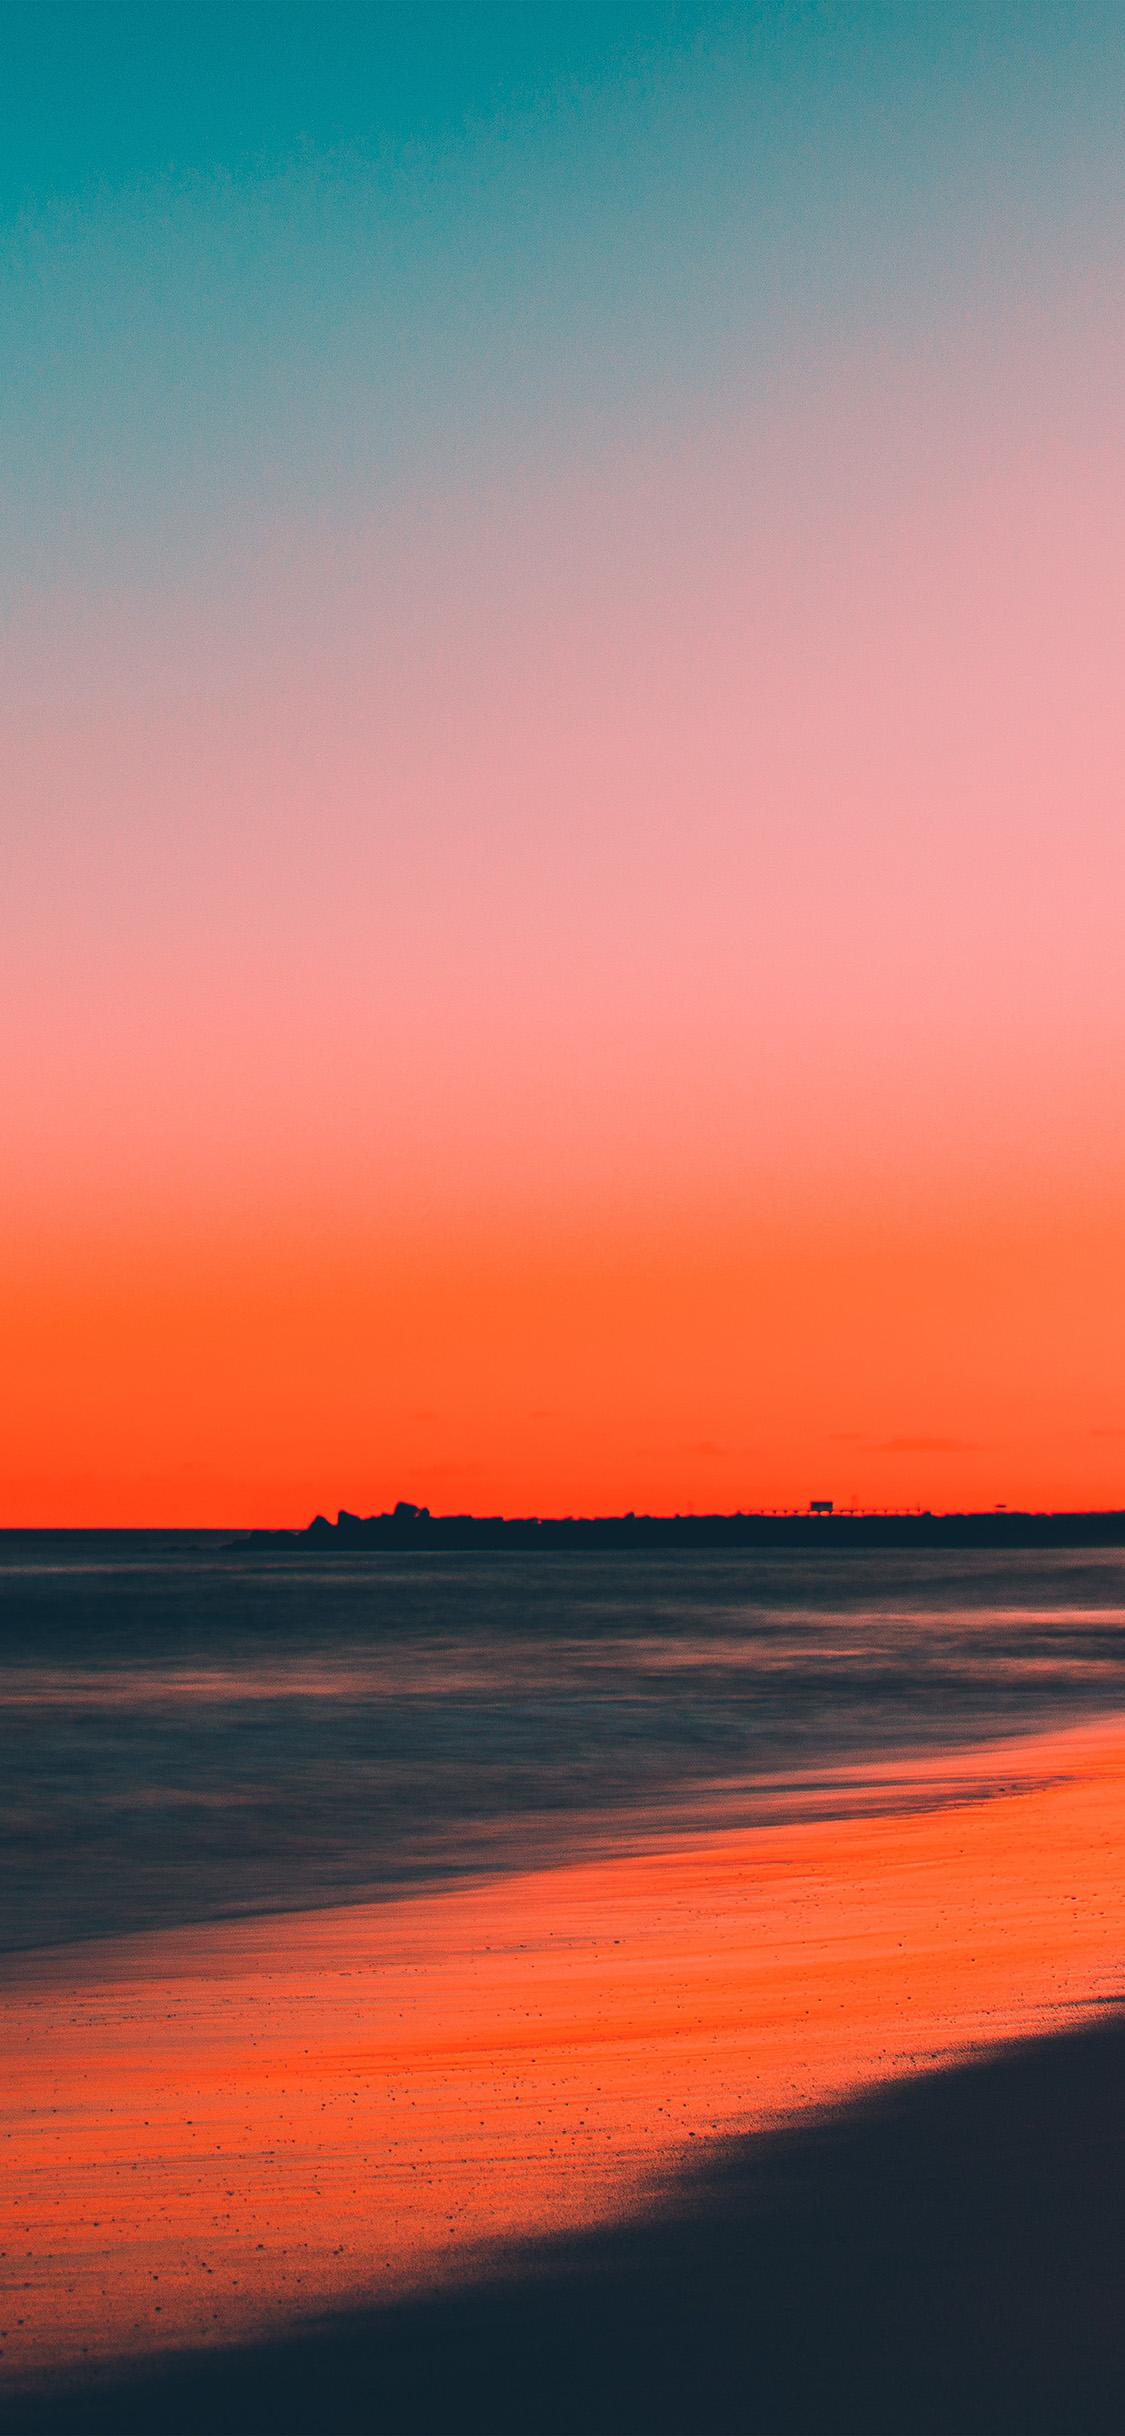 Sunset beach iPhone X Wallpaper Free Download